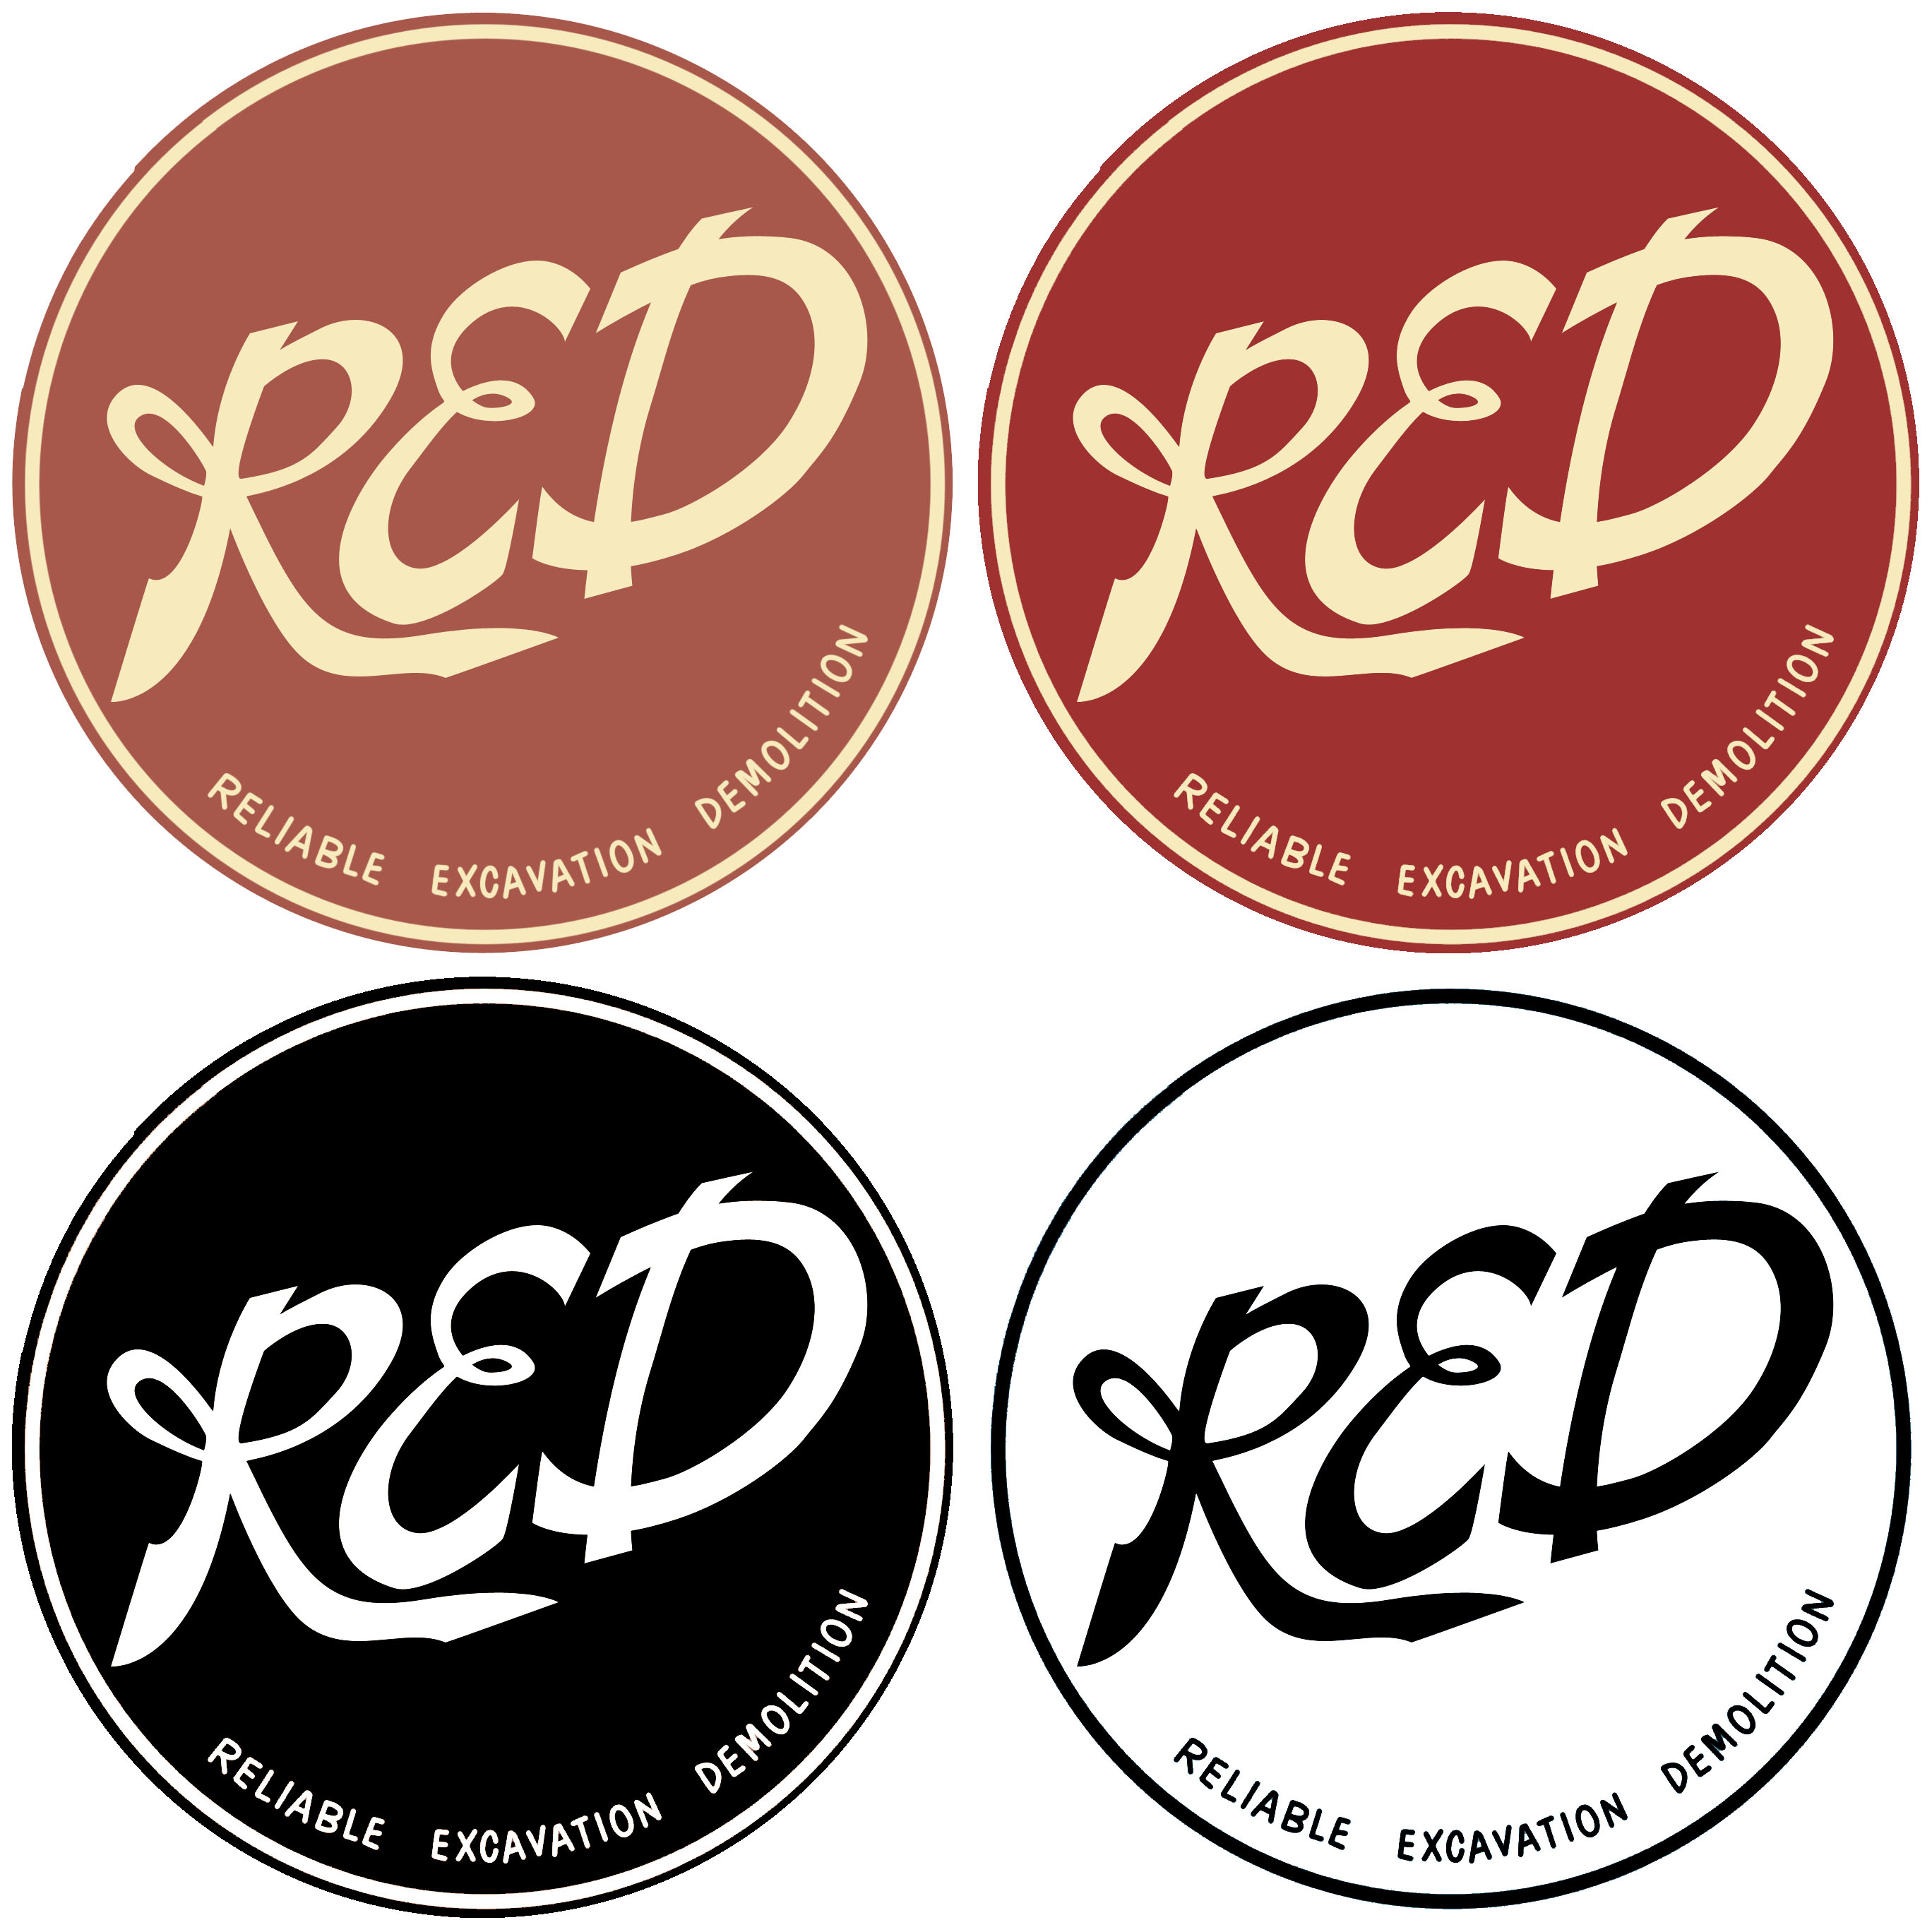 TF2 Red Circle Logos by kristinbowles DeviantArt